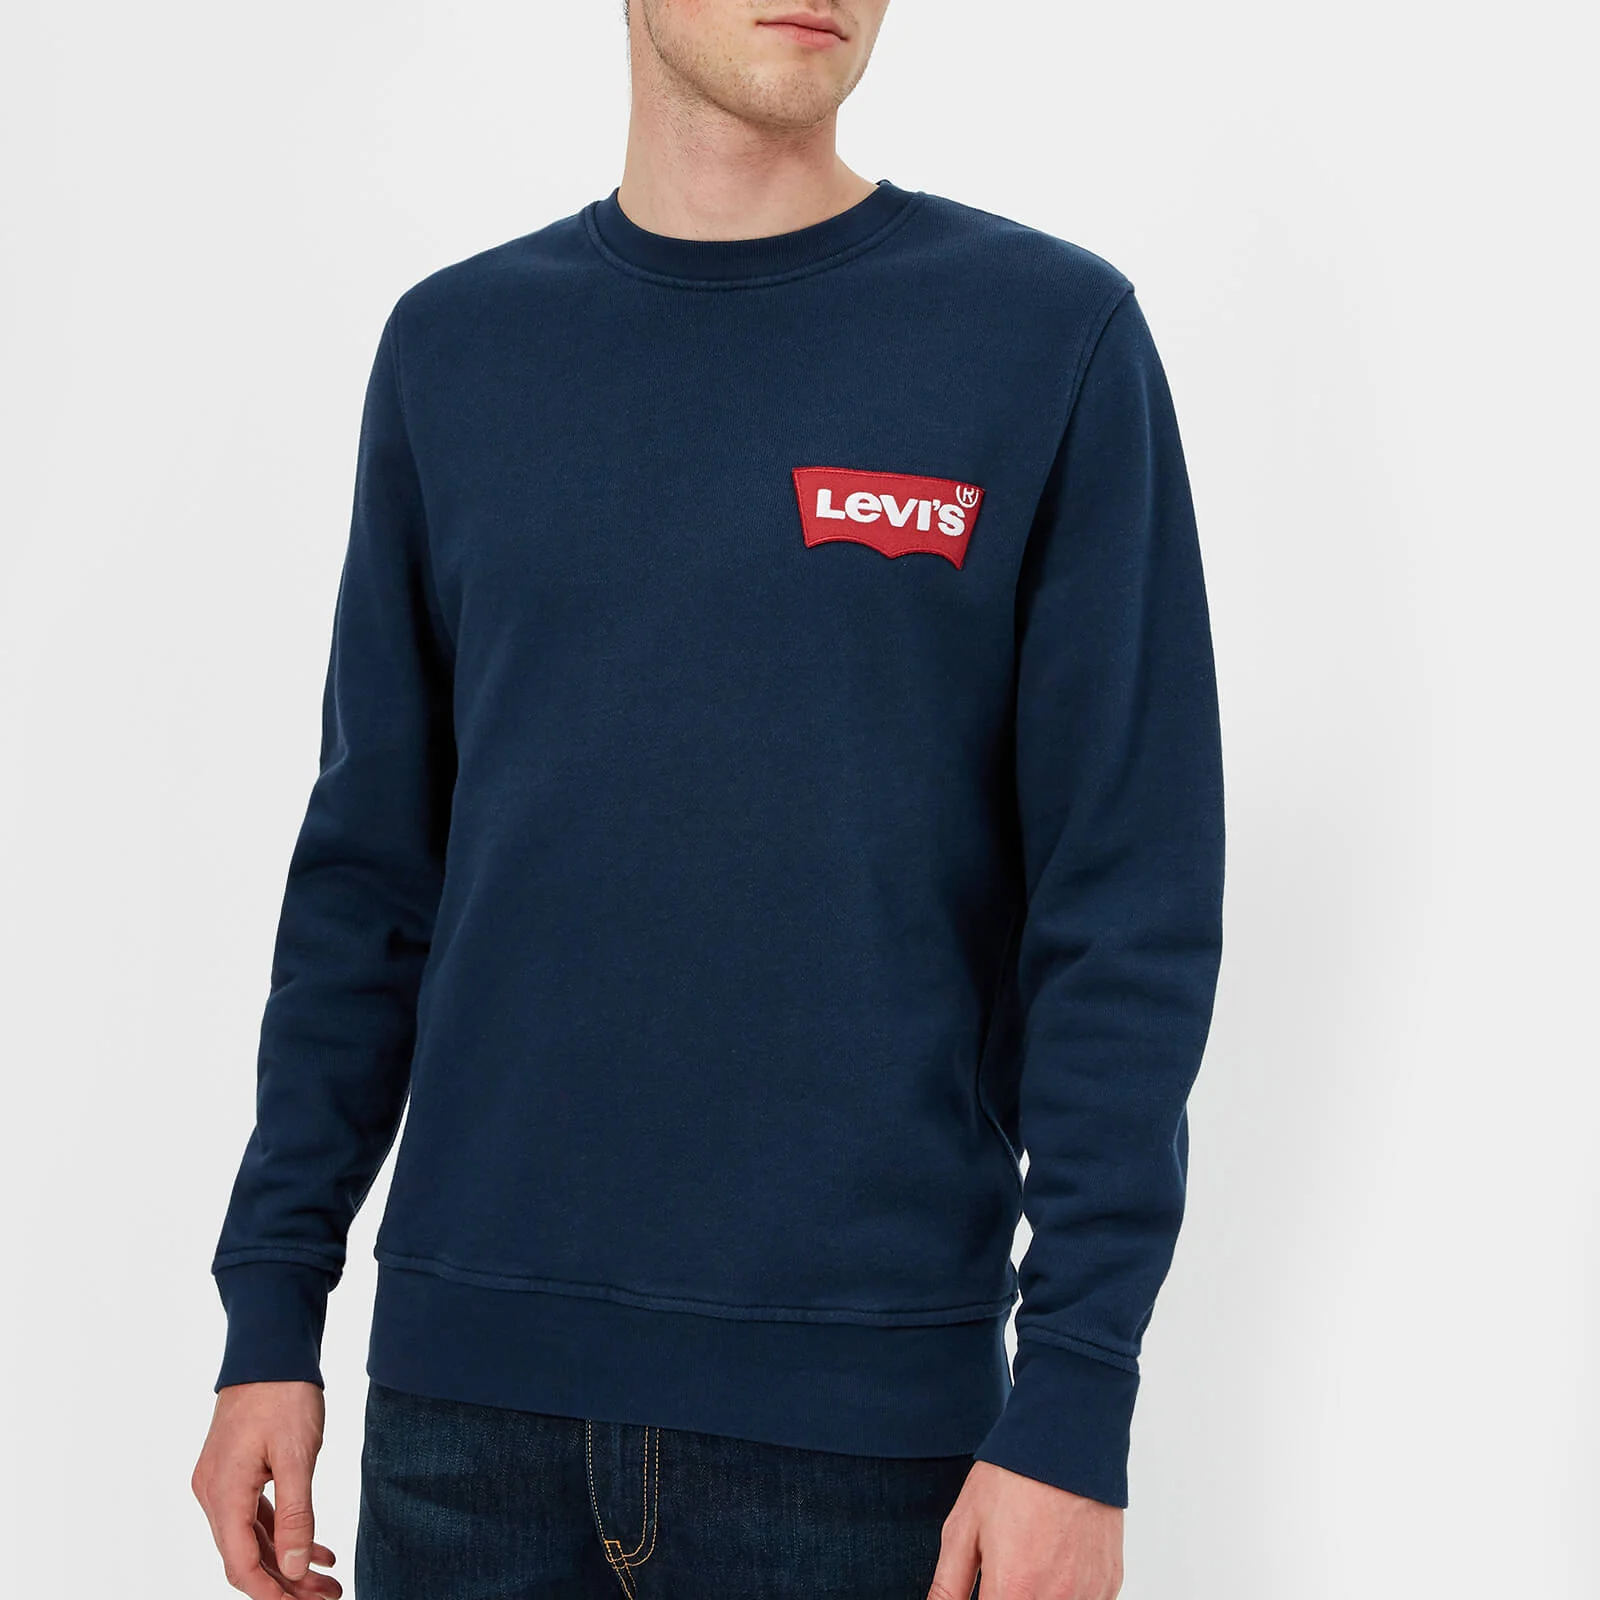 Levi's Men's Modern Crew Sweatshirt - Dress Blues Image 1